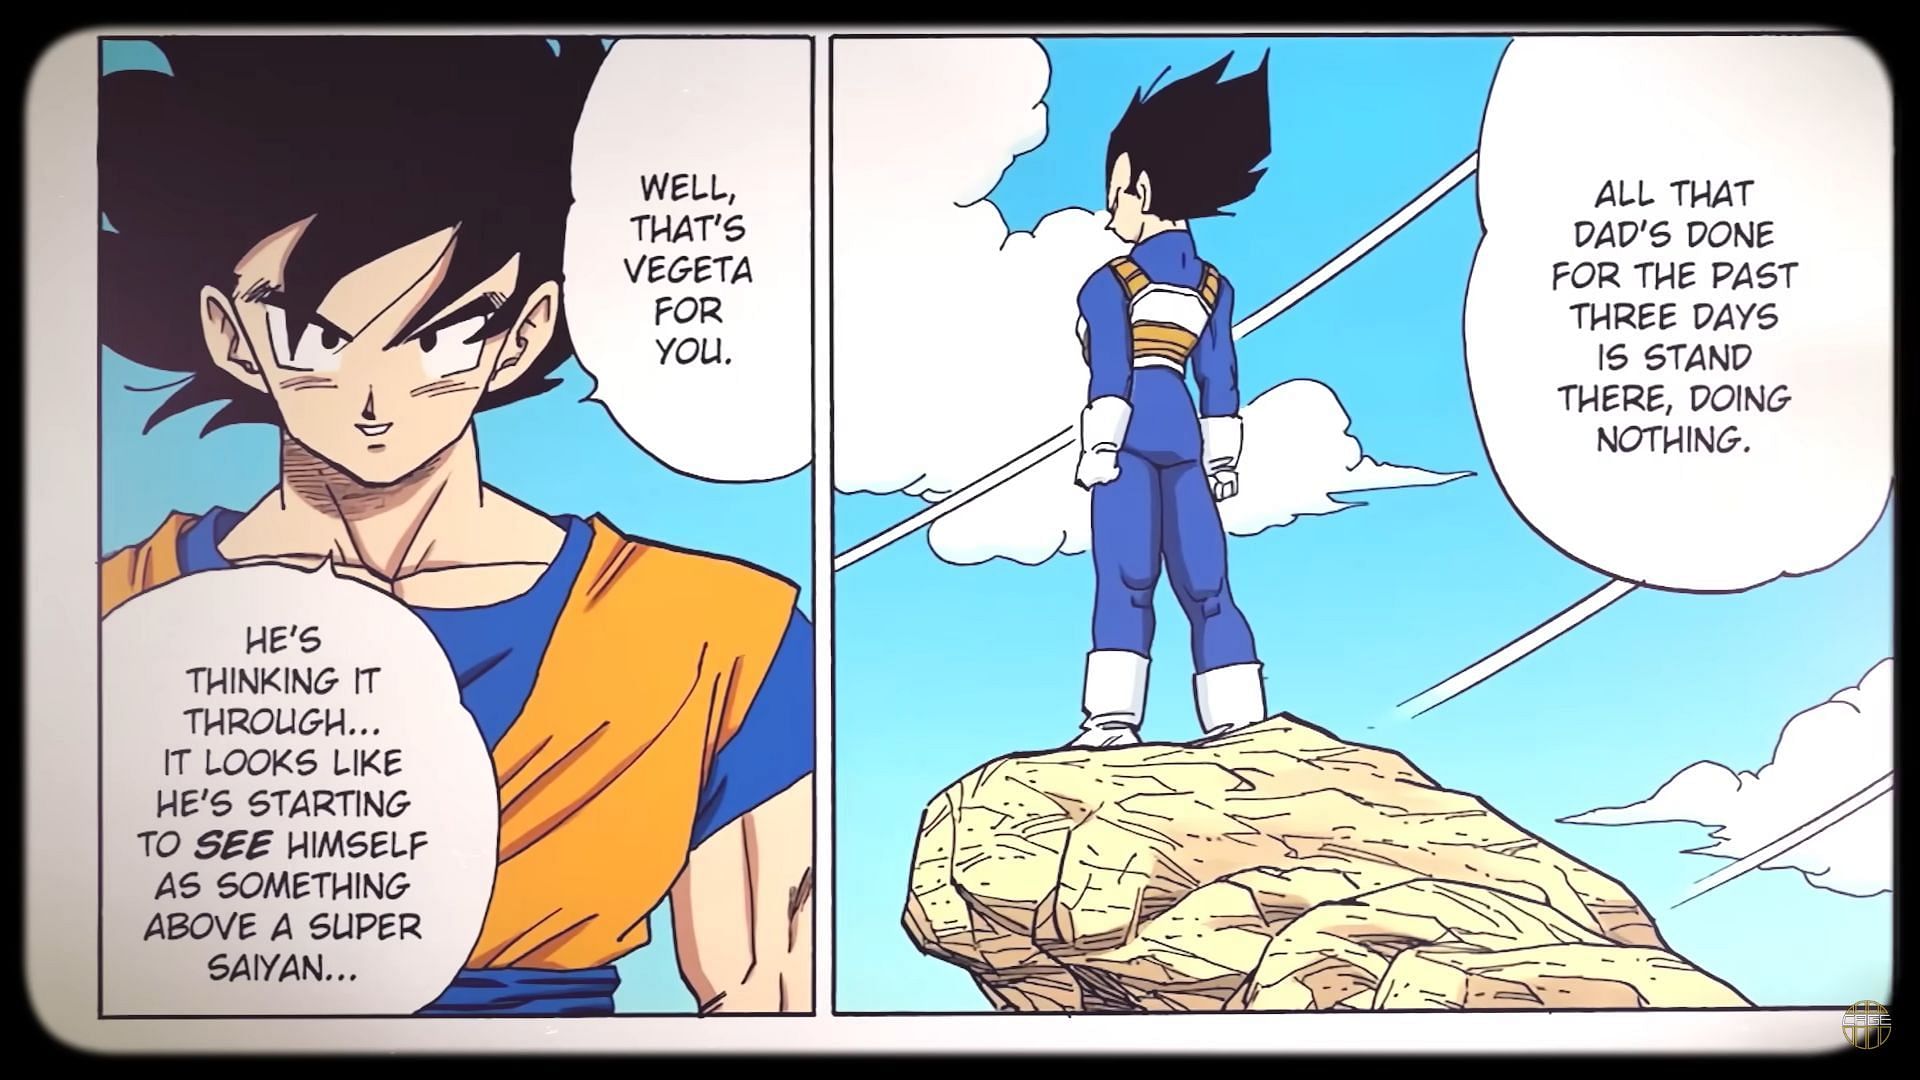 Goku acknowledging Vegeta meditating in the original manga (Image via Akira Toriyama/Shueisha)